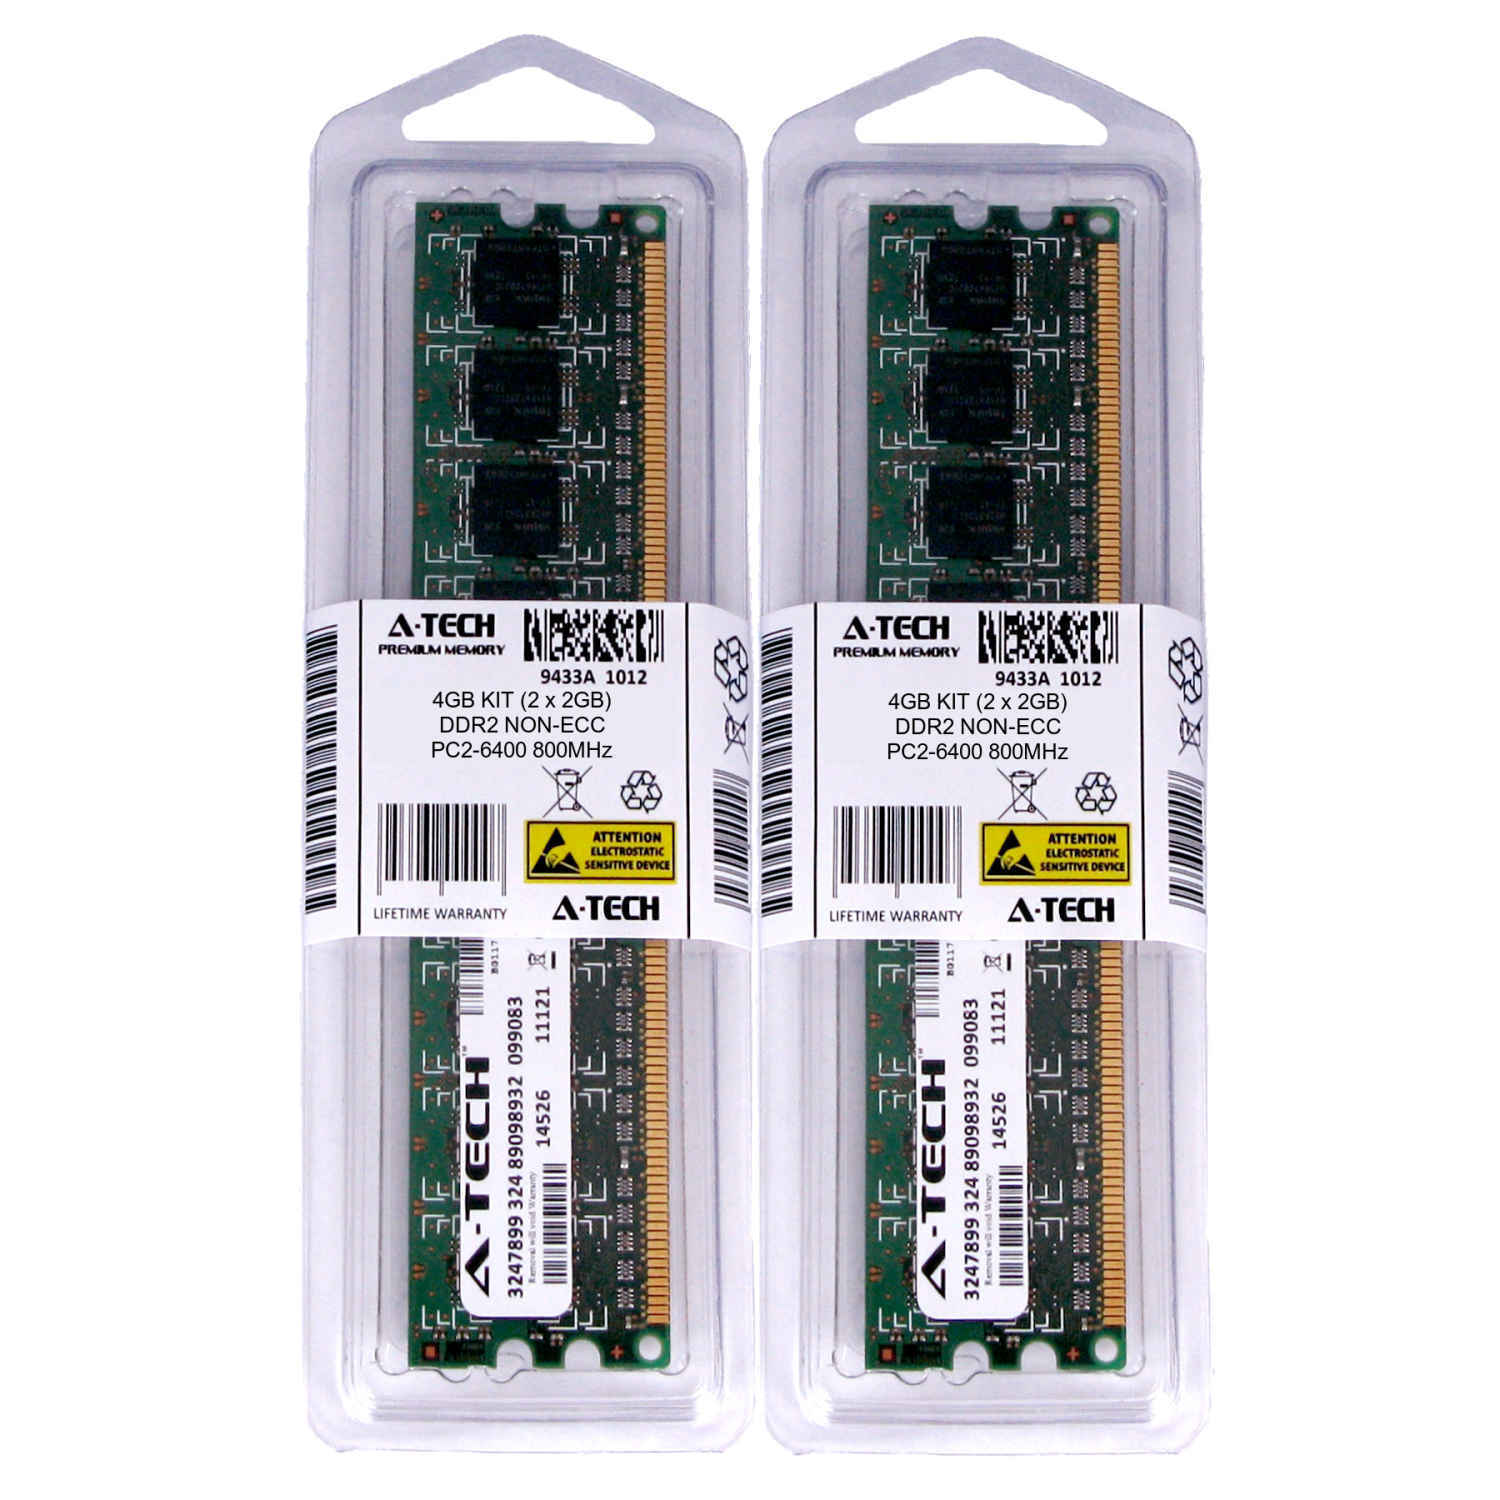 4GB KIT 2 x 2GB DIMM DDR2 NON-ECC PC2-6400 800MHz 800 MHz DDR-2 DDR 2 Ram Memory